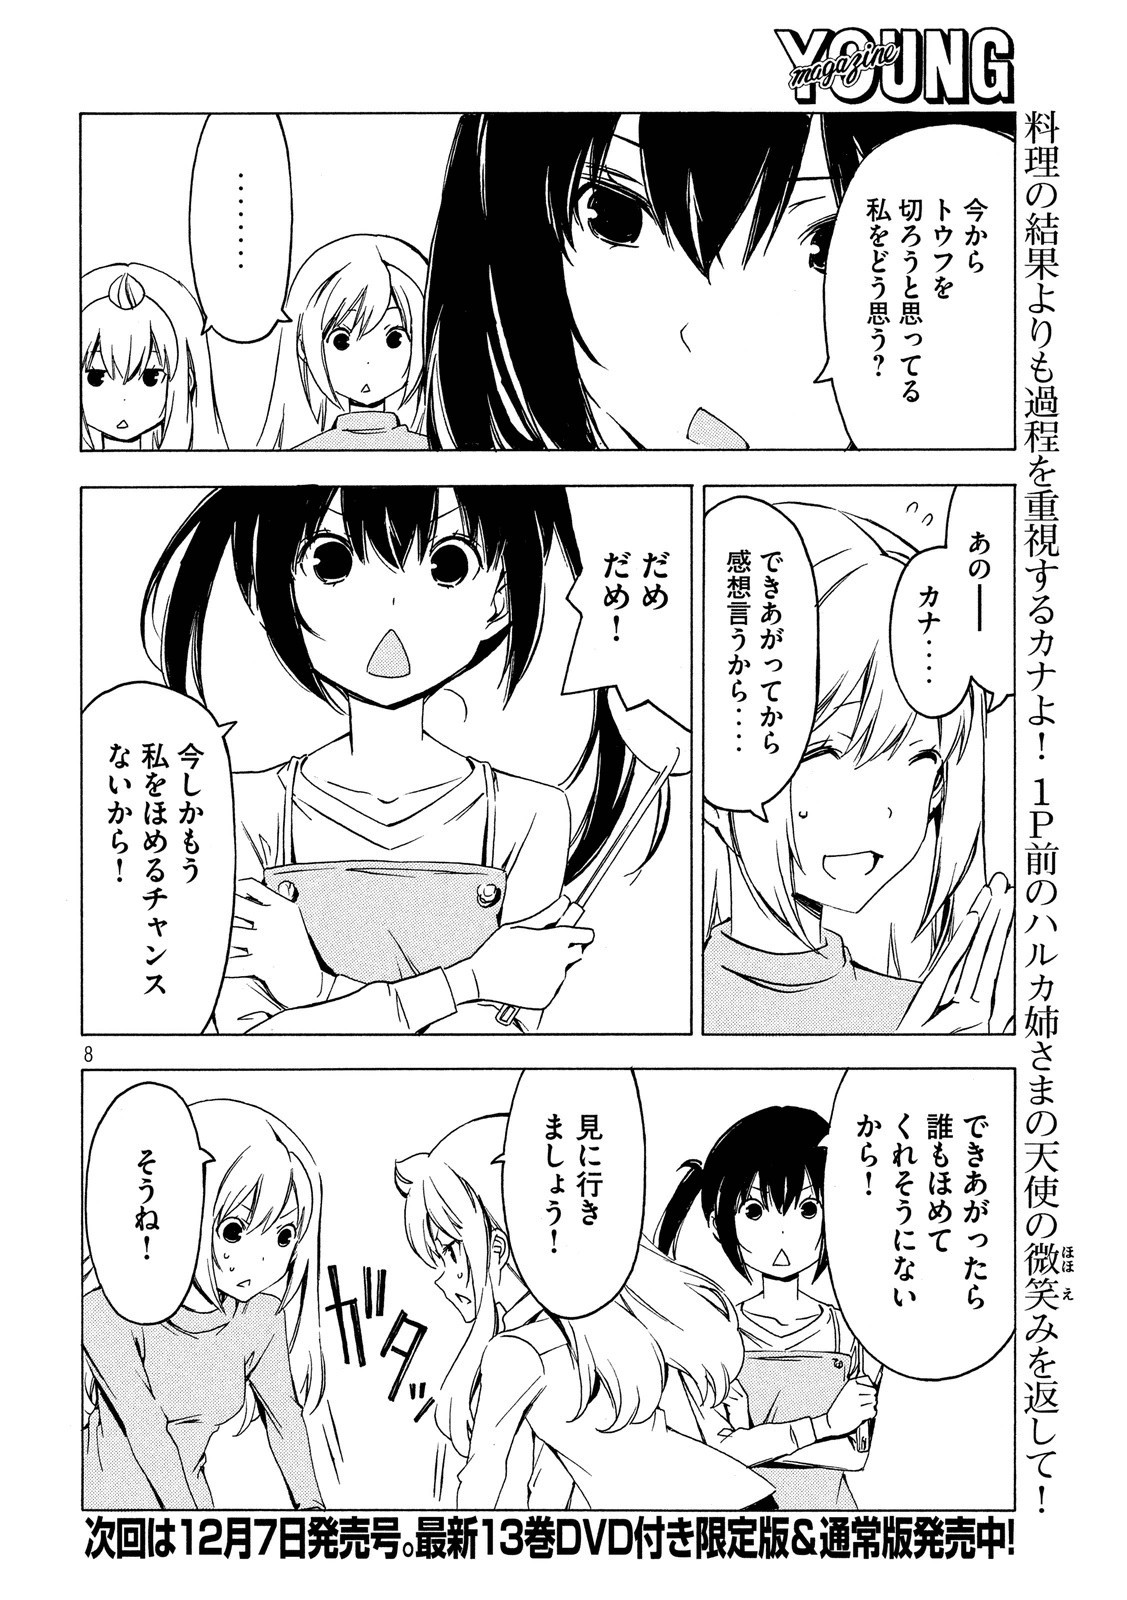 Minami-ke - Chapter 281 - Page 8